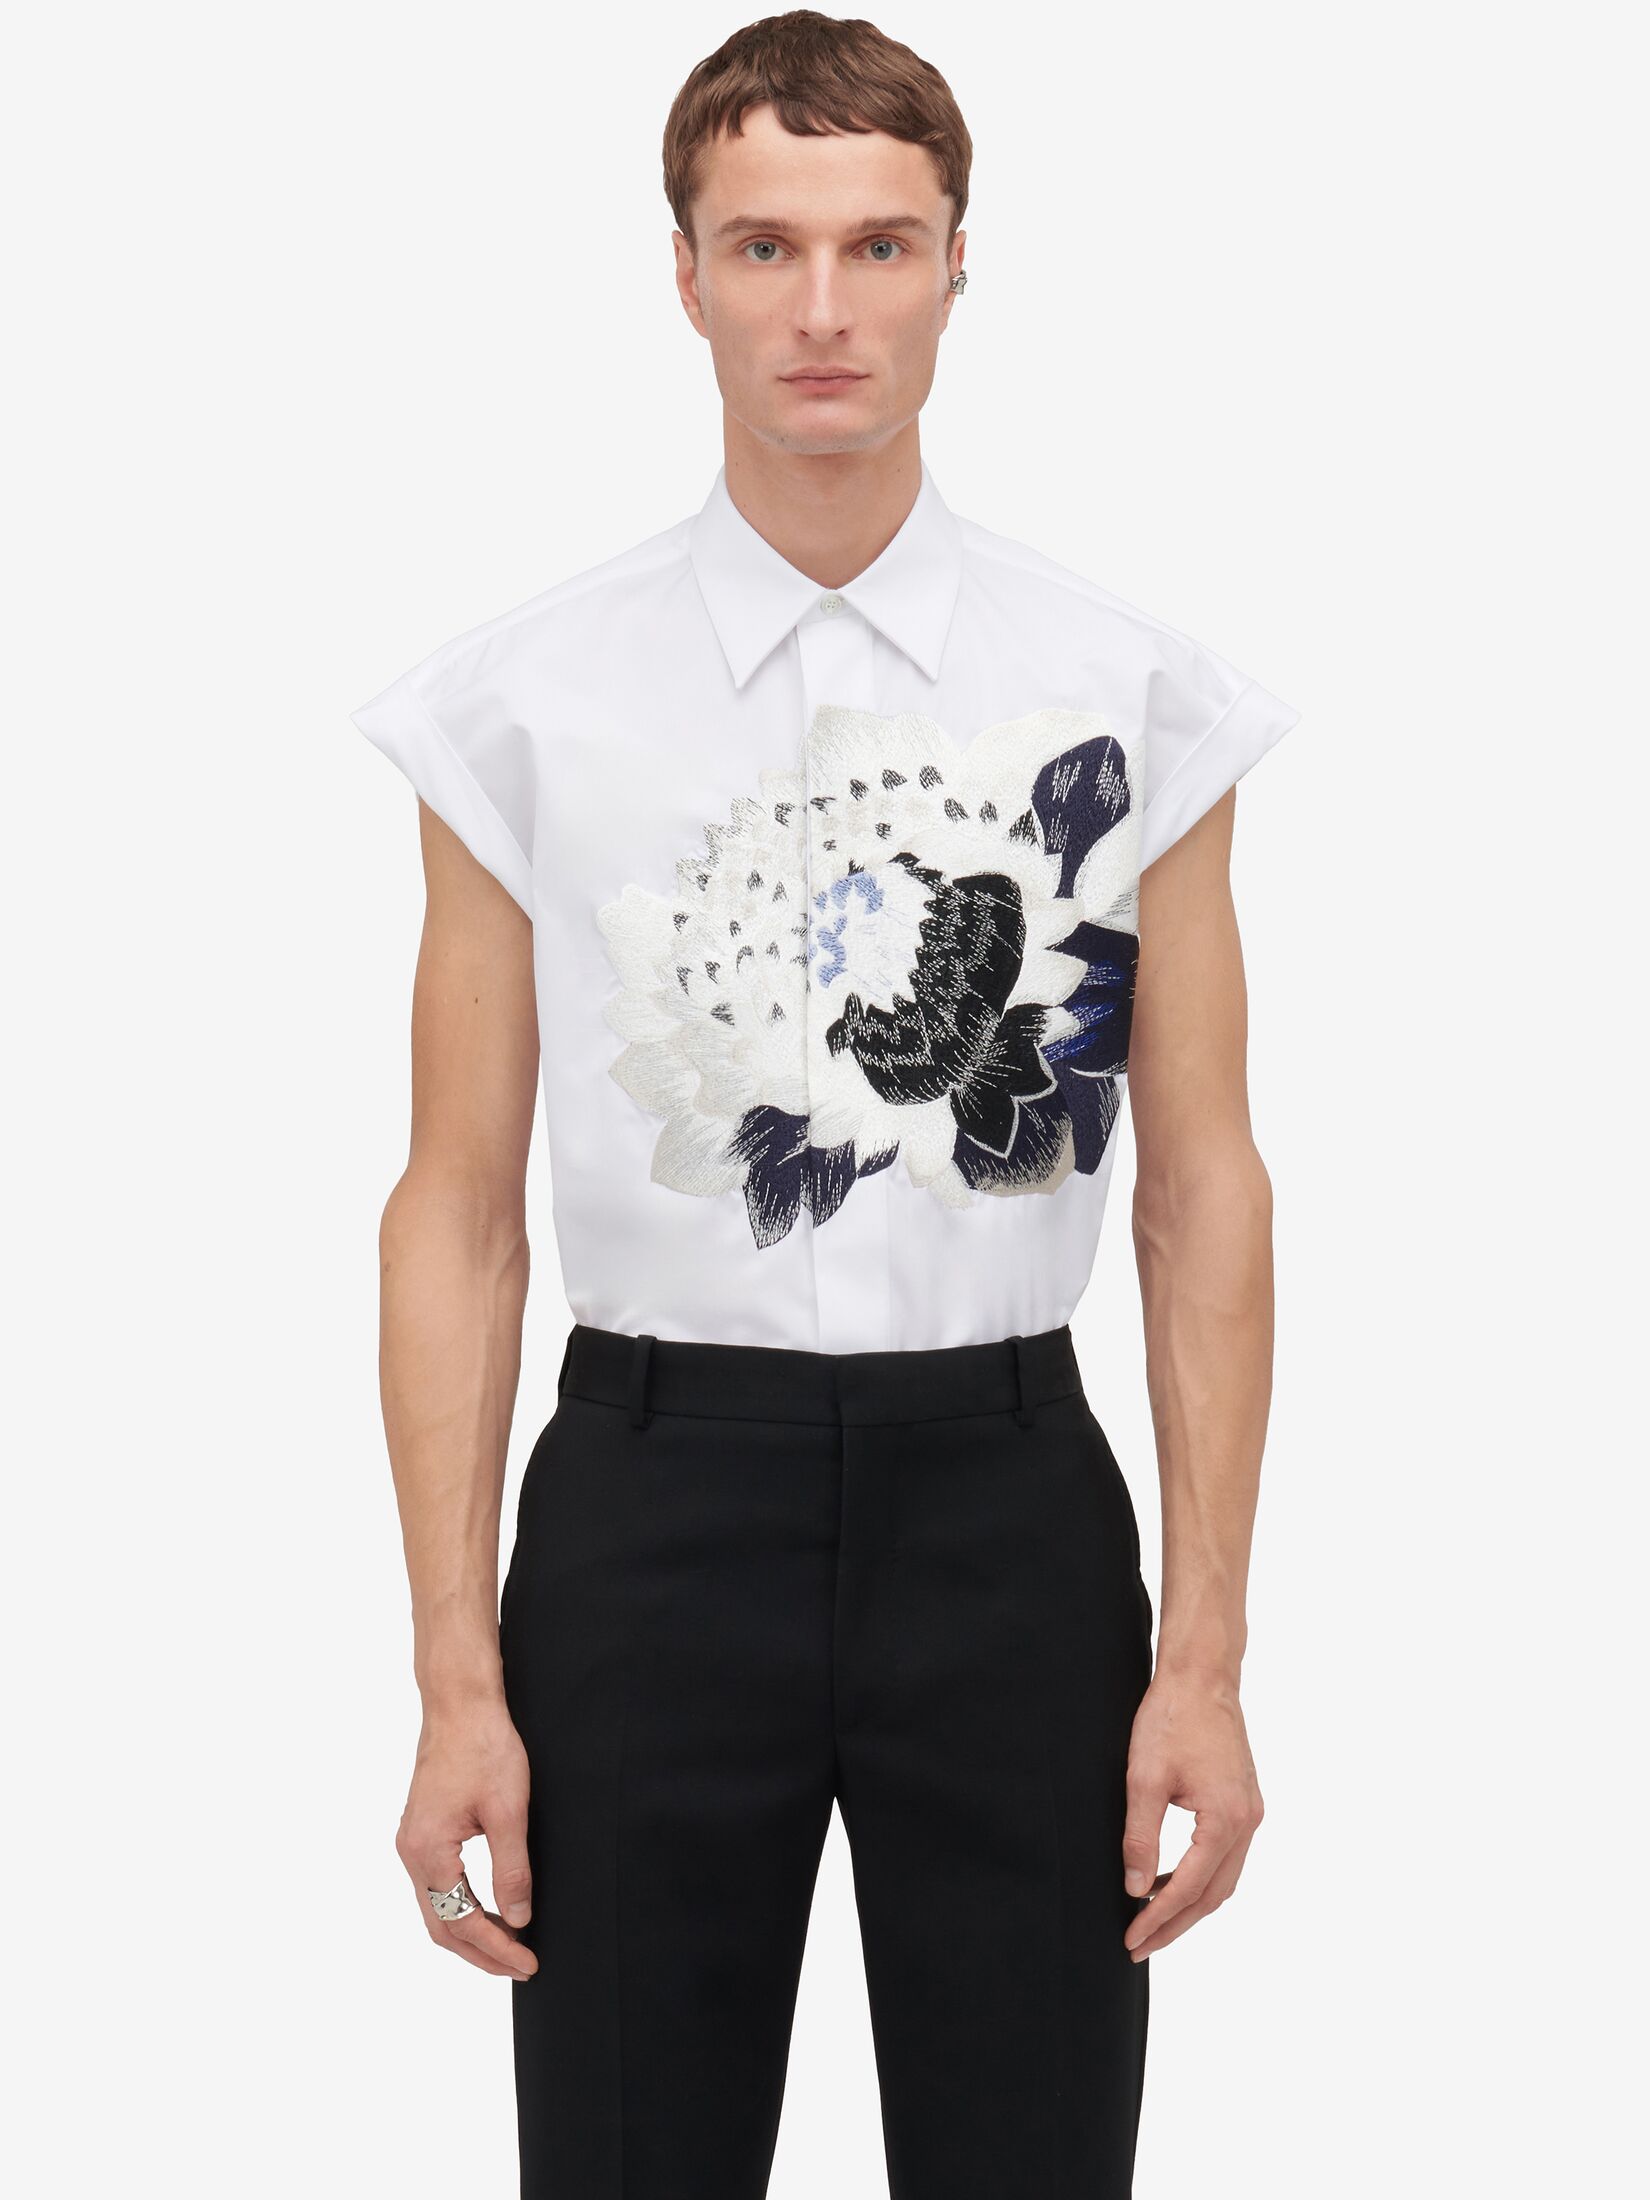 Ärmelloses Hemd mit Dutch Flower-Motiv